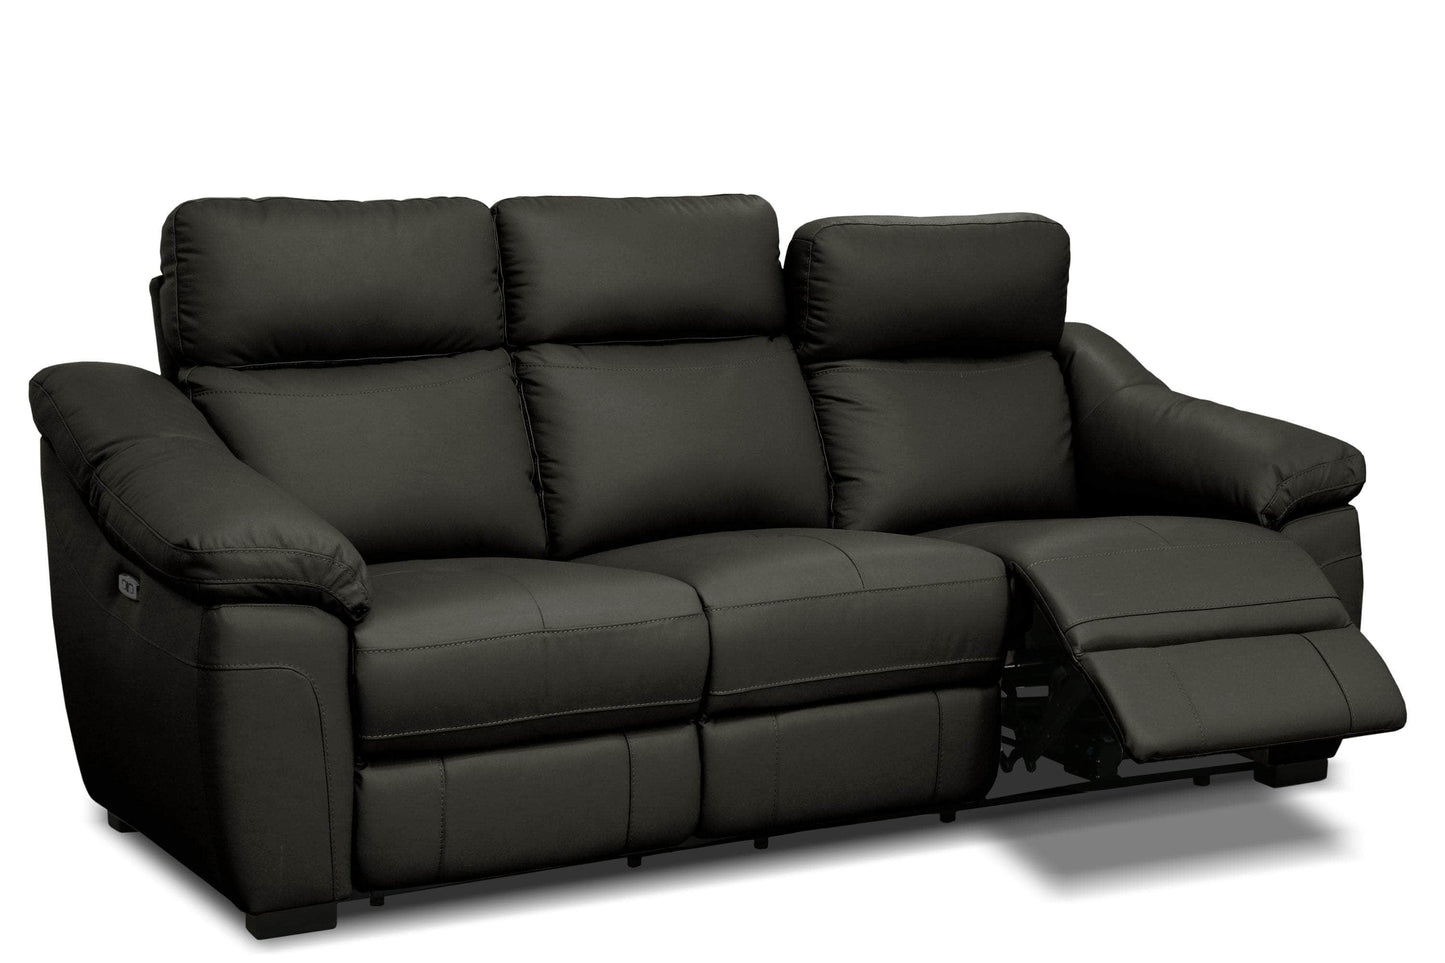 Levoluxe Sofa Maverick 86.2" Power Reclining Sofa with Power Headrest in Dark Chocolate Leather Match